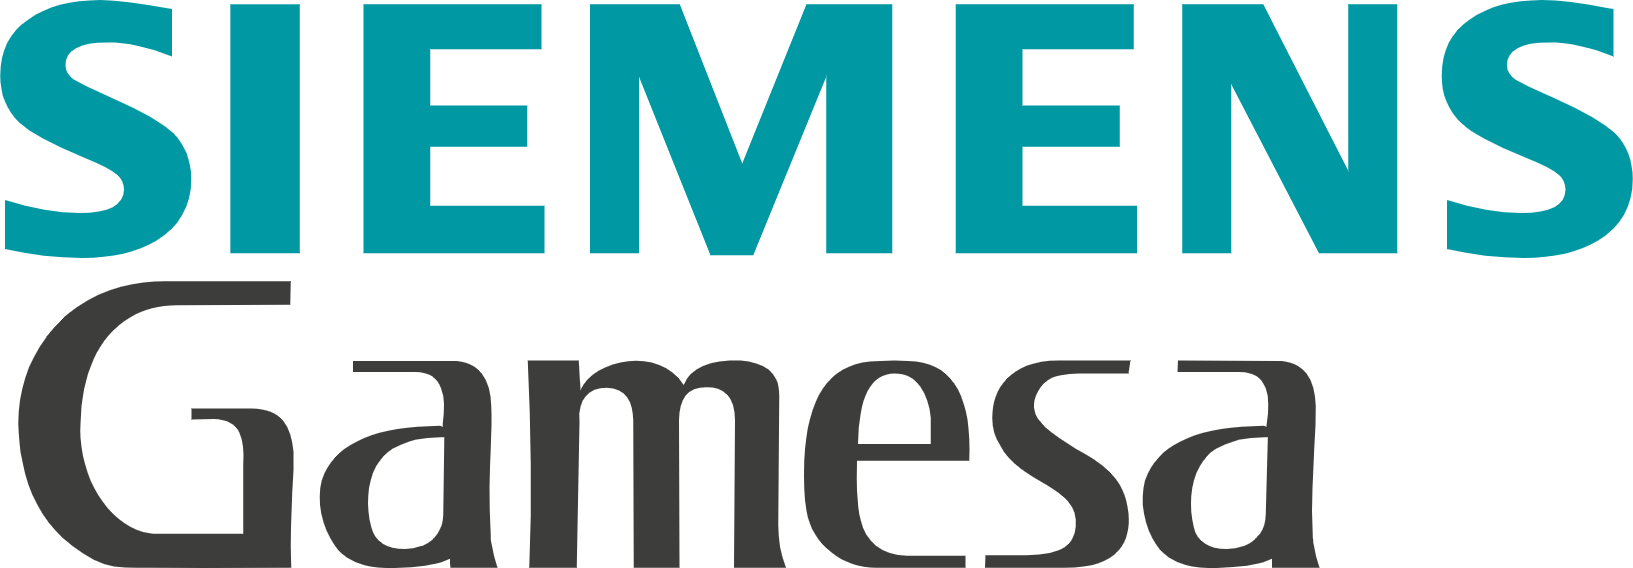 Siemens Gamesa Logo (transparentes PNG)